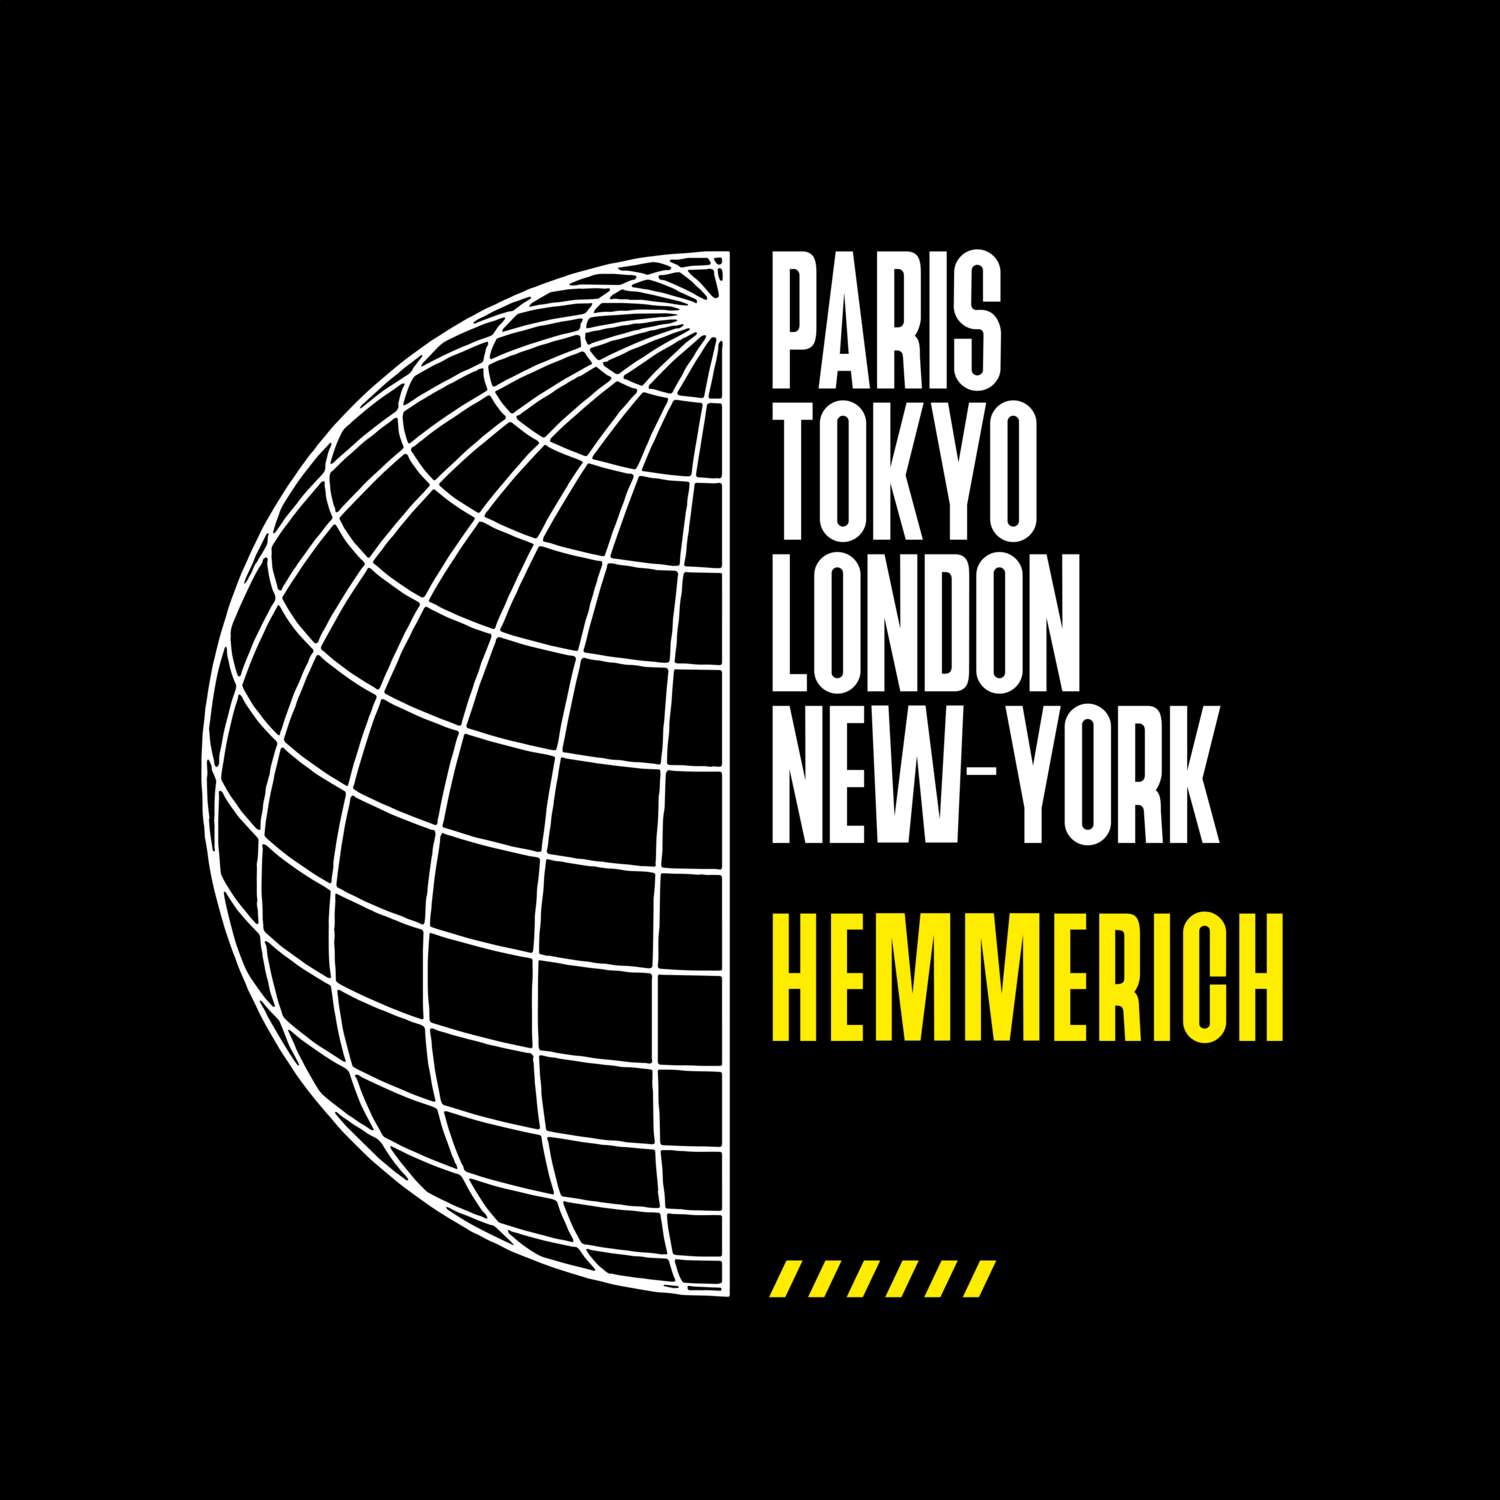 Hemmerich T-Shirt »Paris Tokyo London«